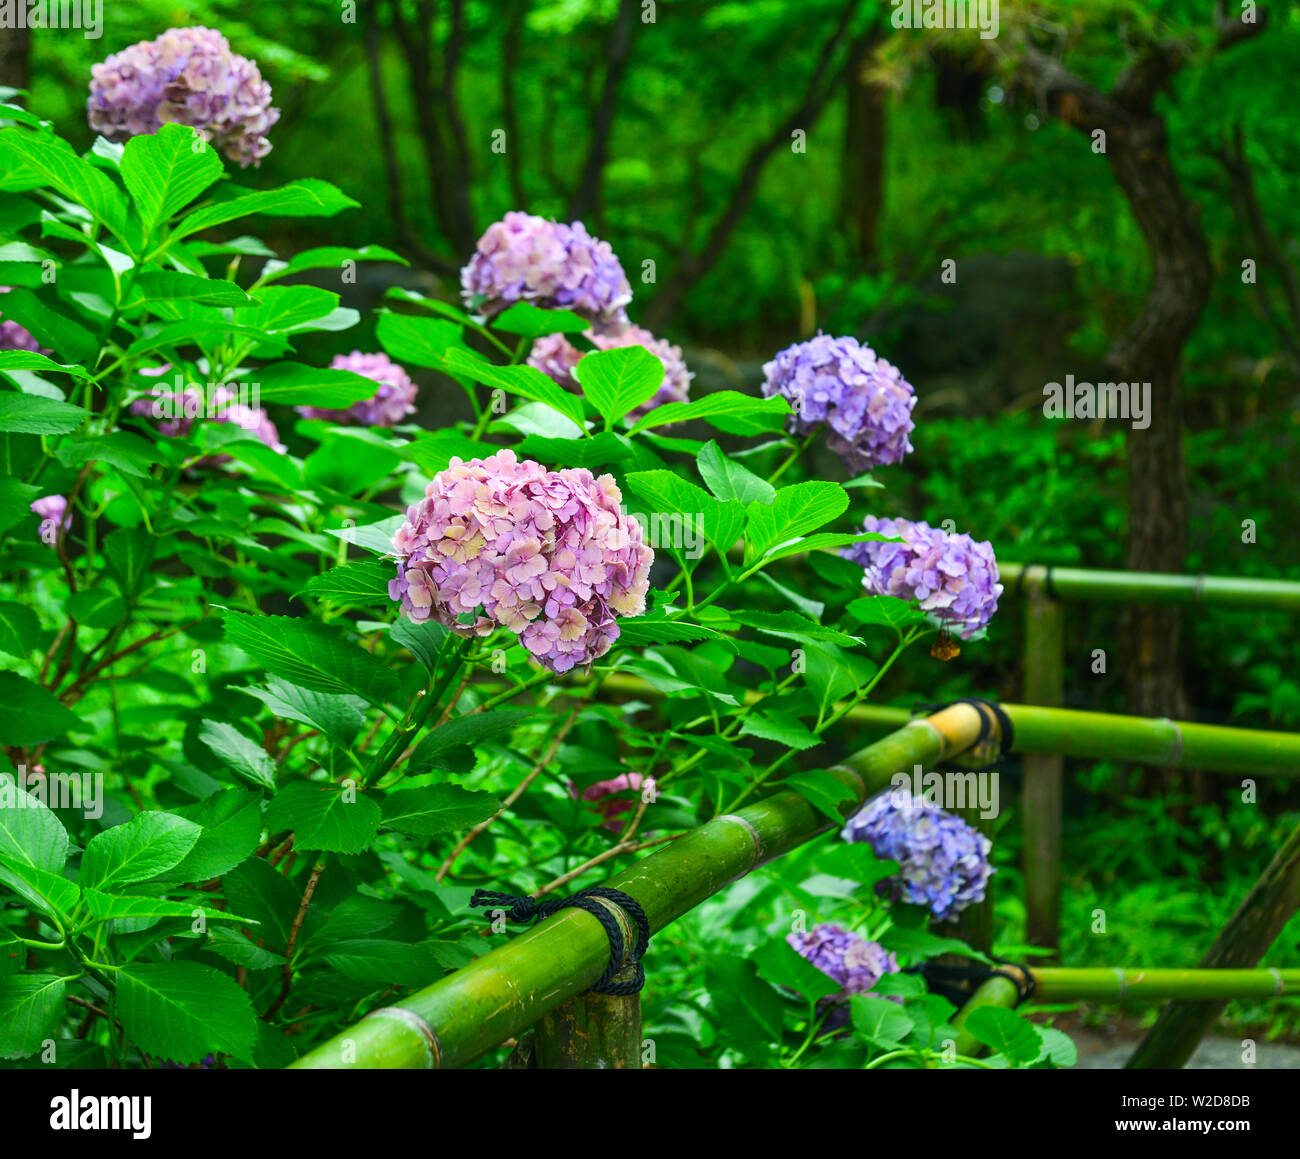 Ajisai Flower Hydrangea Blooming In Spring And Summer At Botanic Garden Stock Photo Alamy